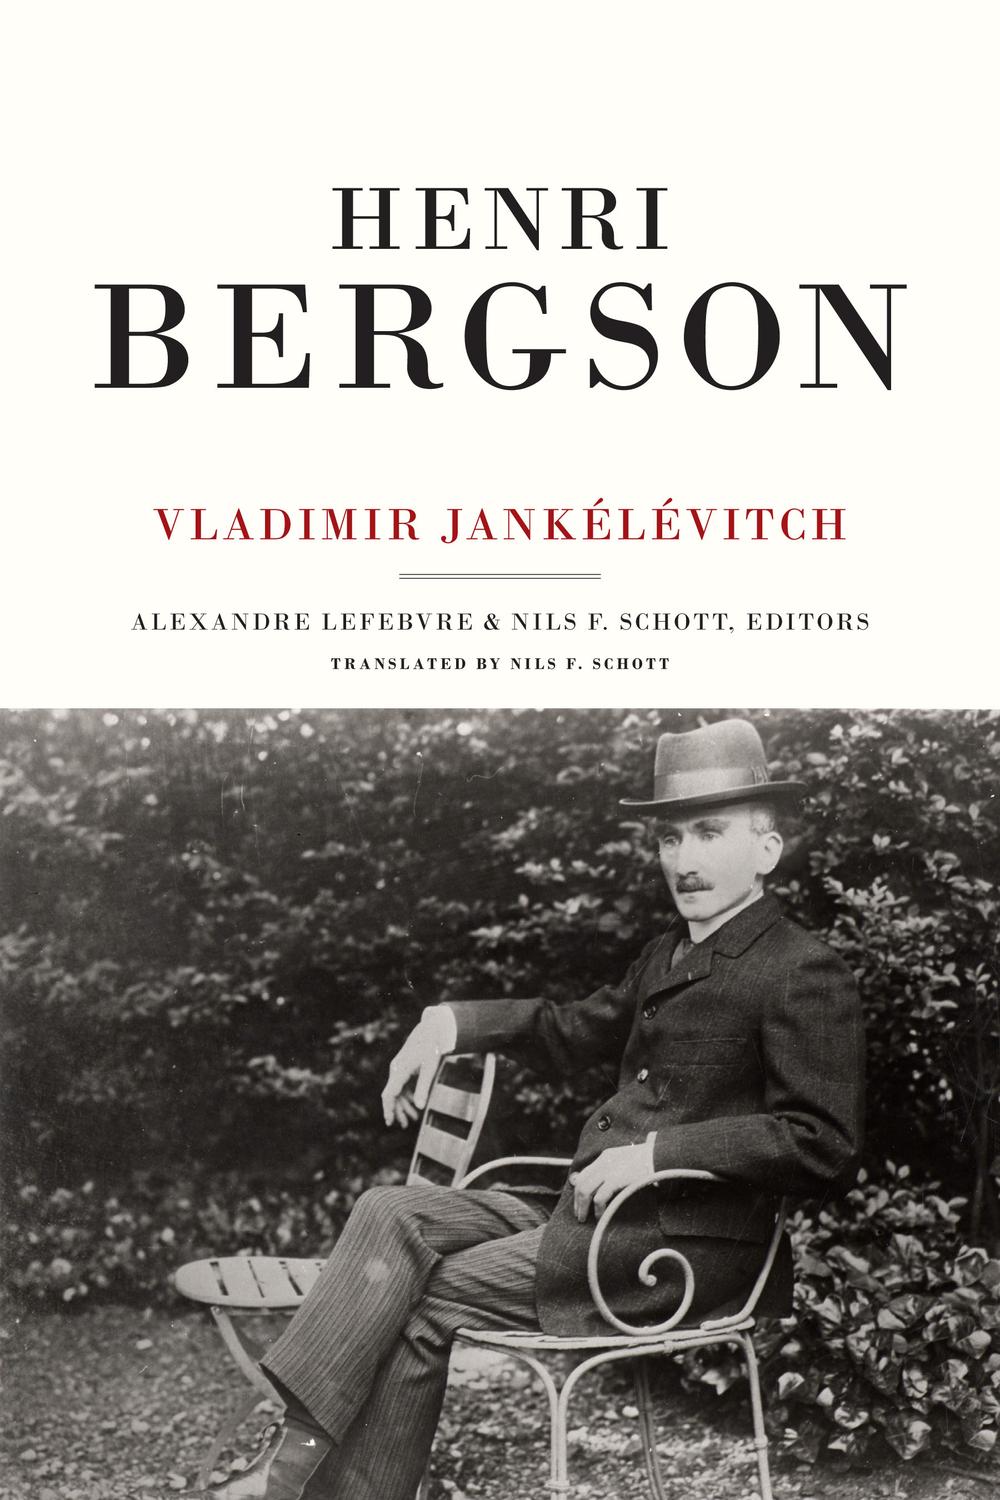 Henri Bergson - Vladimir Jankelevitch